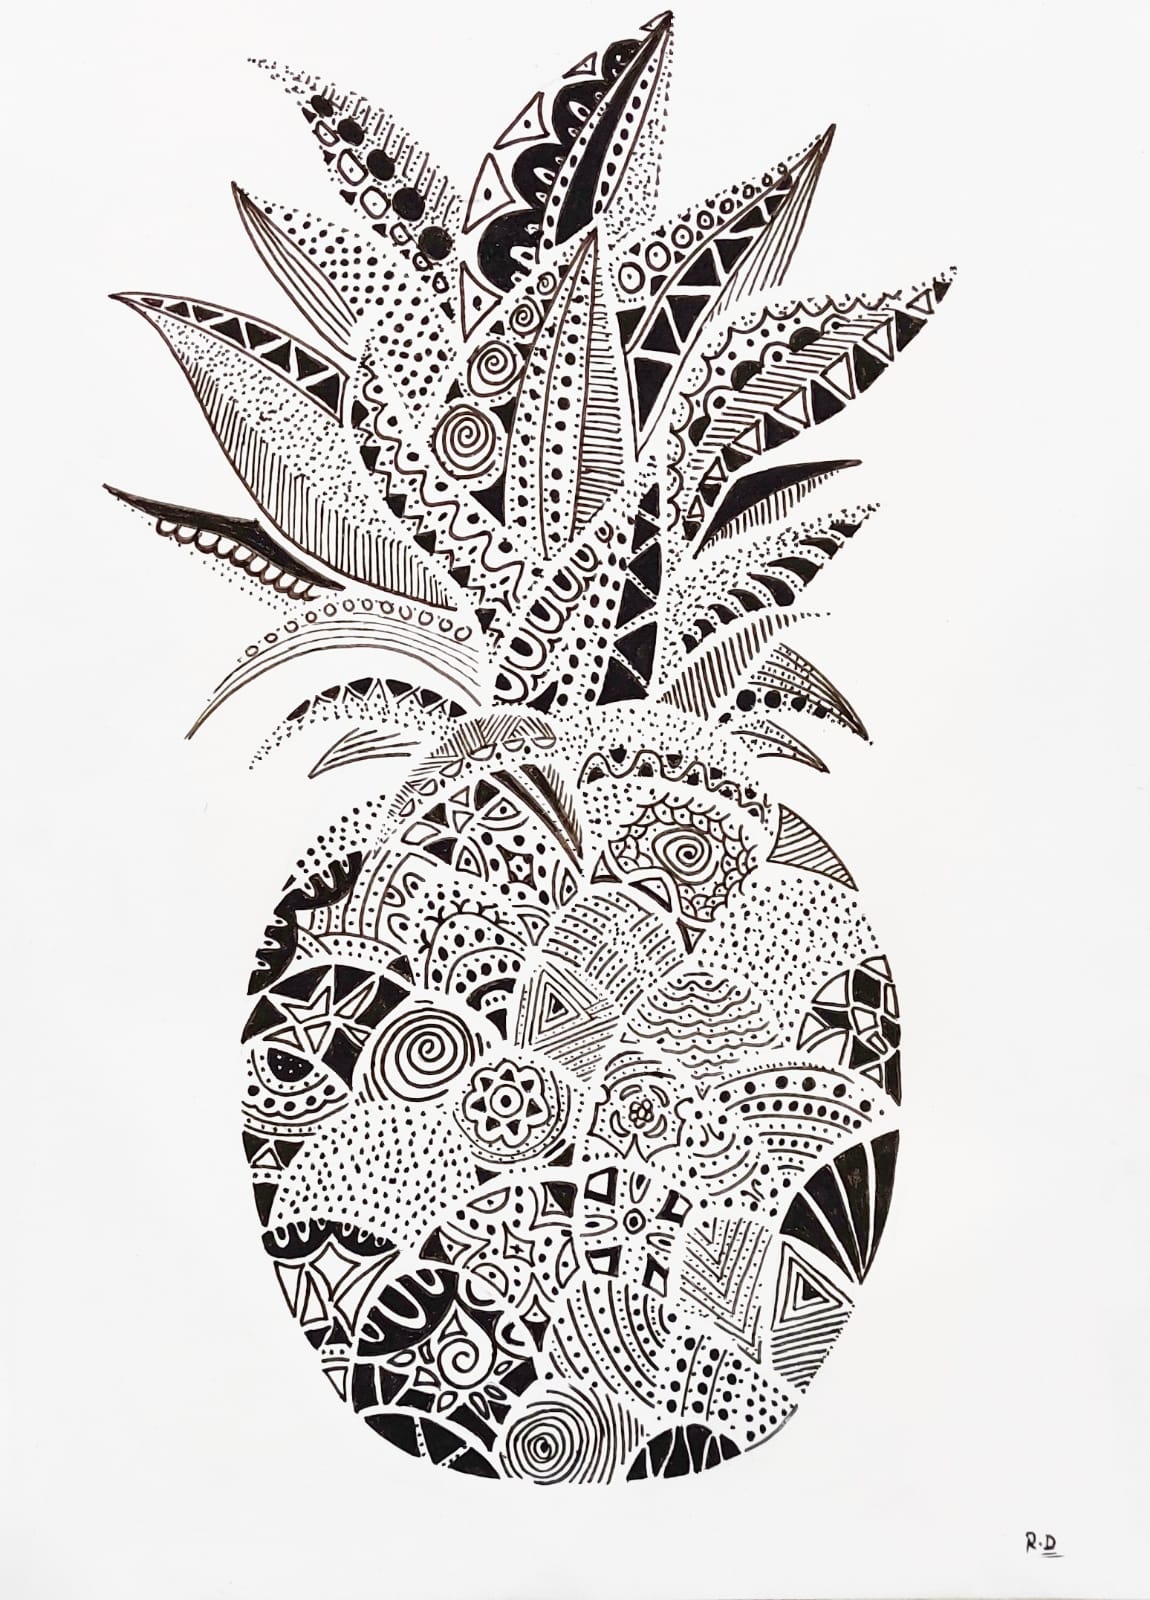 Figurative Drawing with Pen on Paper "Pineapple" art by Ritu Dua